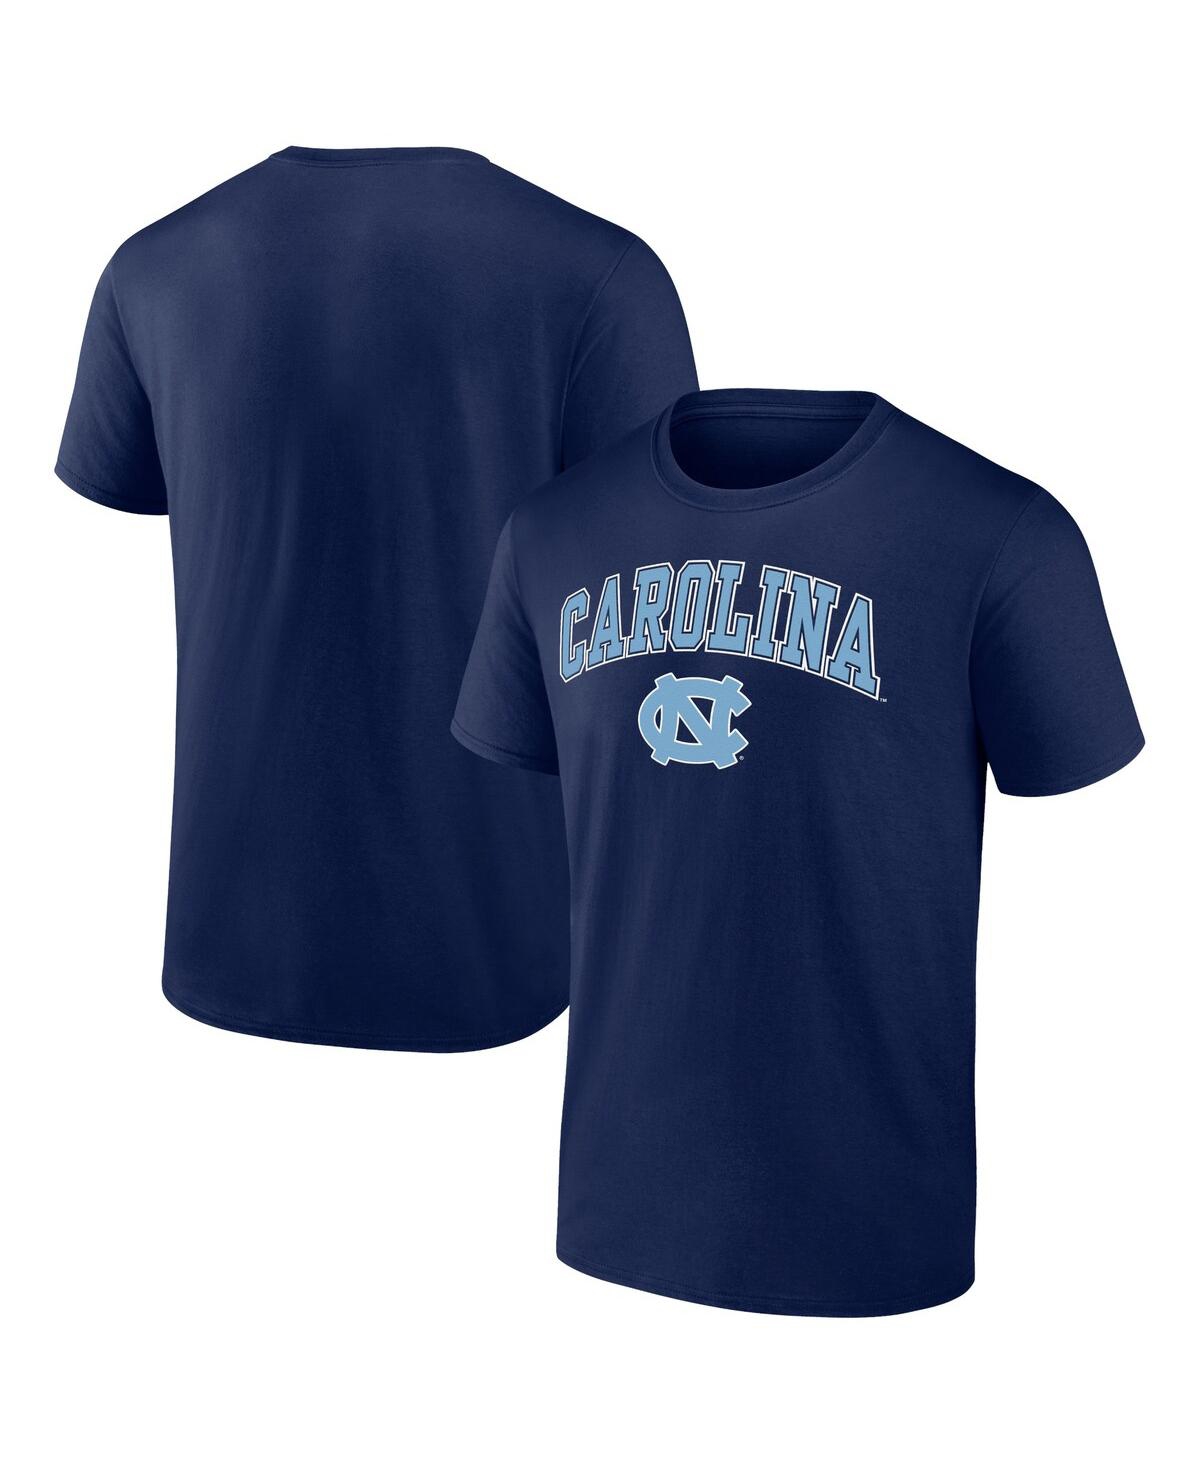 Fanatics Men's  Navy North Carolina Tar Heels Game Day 2-hit T-shirt